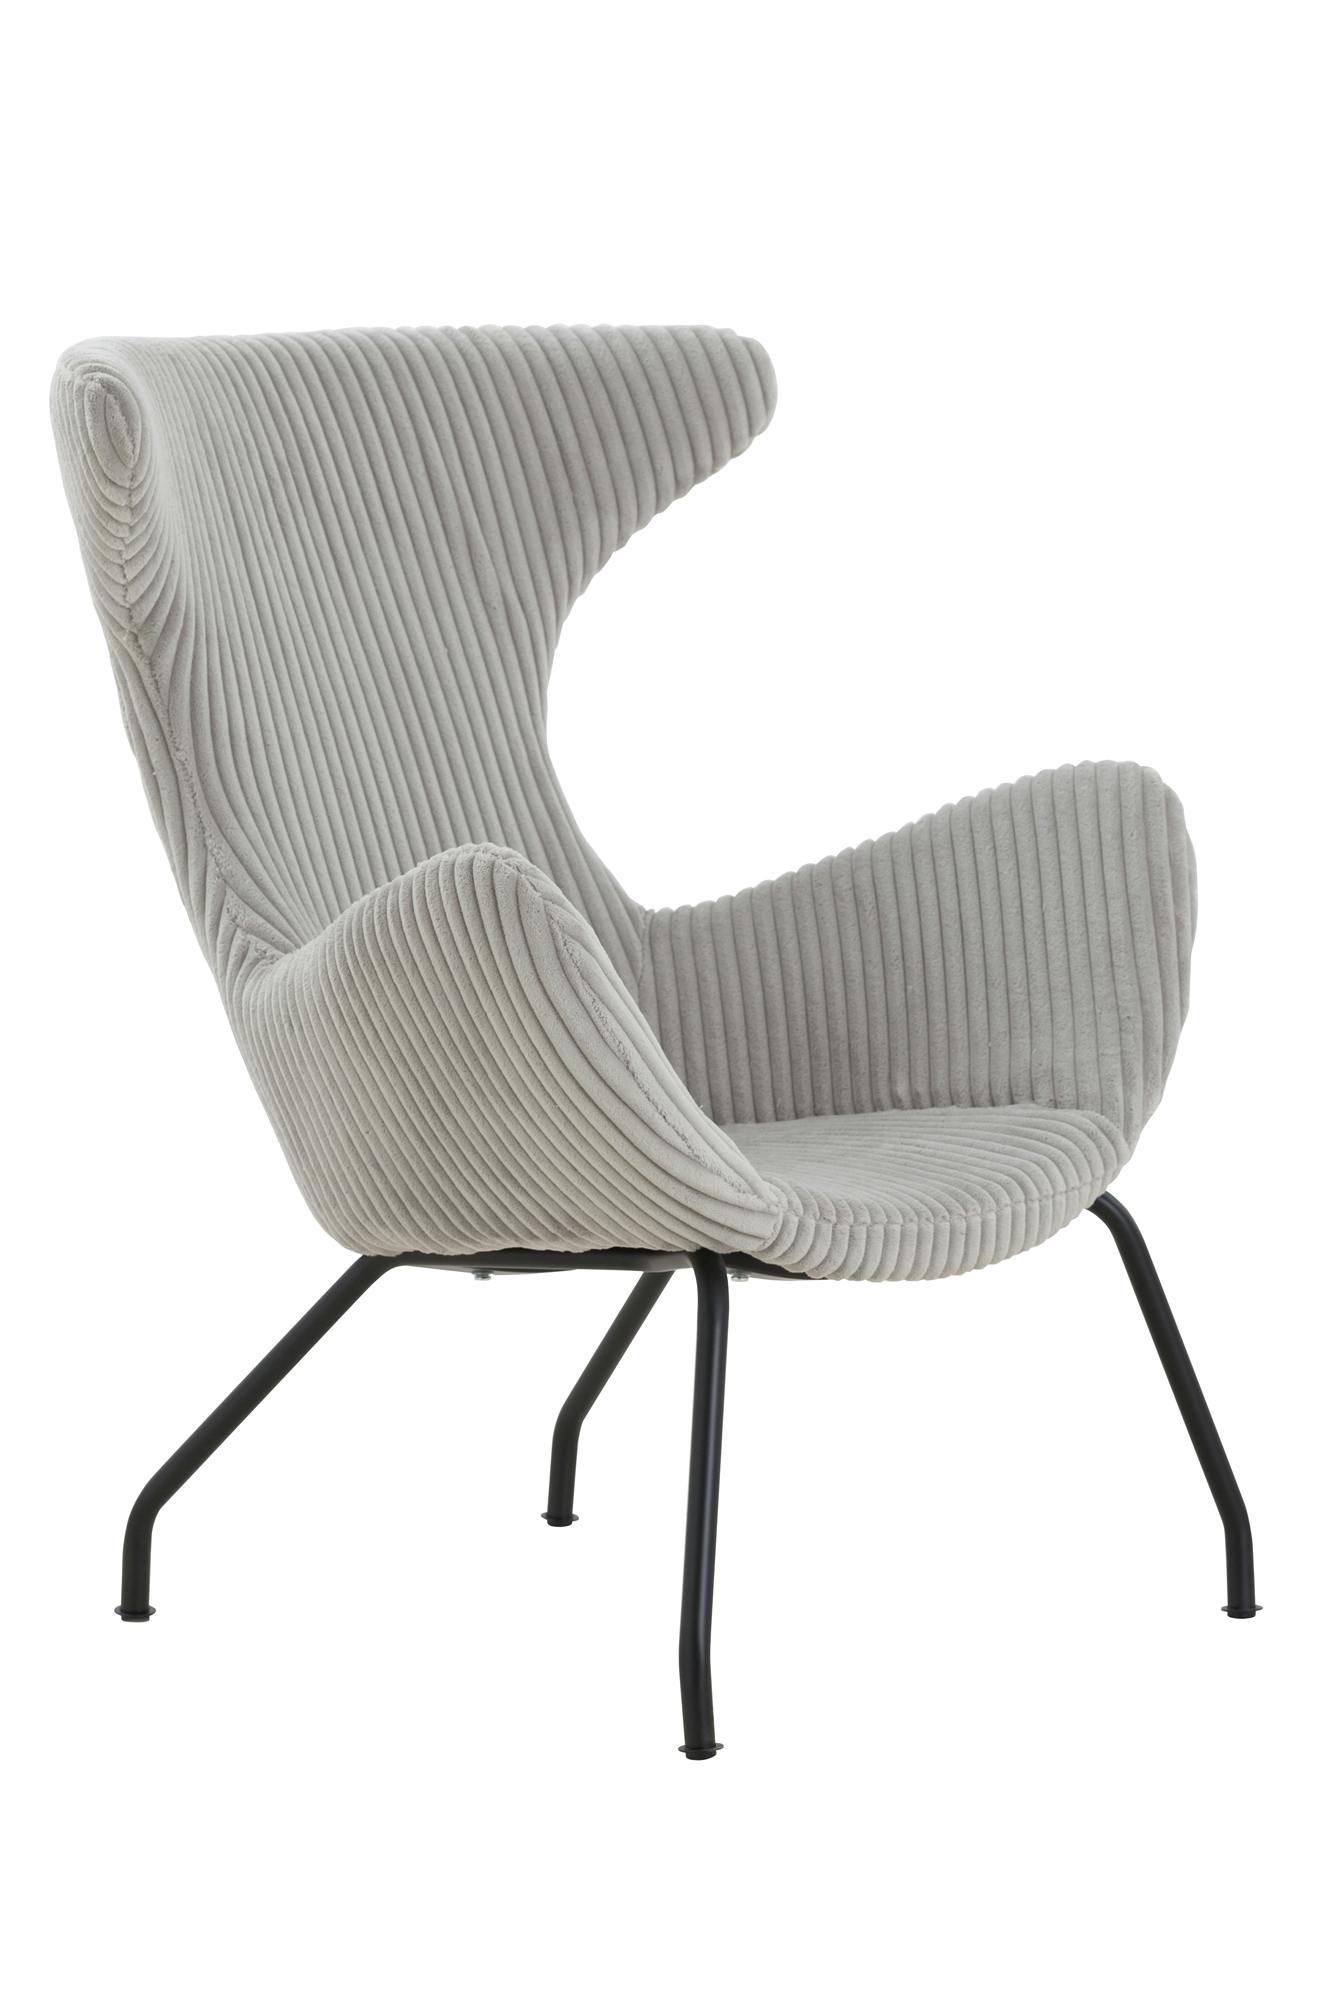 SalesFever Relax-Sessel | Bezug Texturstoff grau | Gestell Metall schwarz |  B 78 x T 77 x H 96 cm | METRO Marktplatz